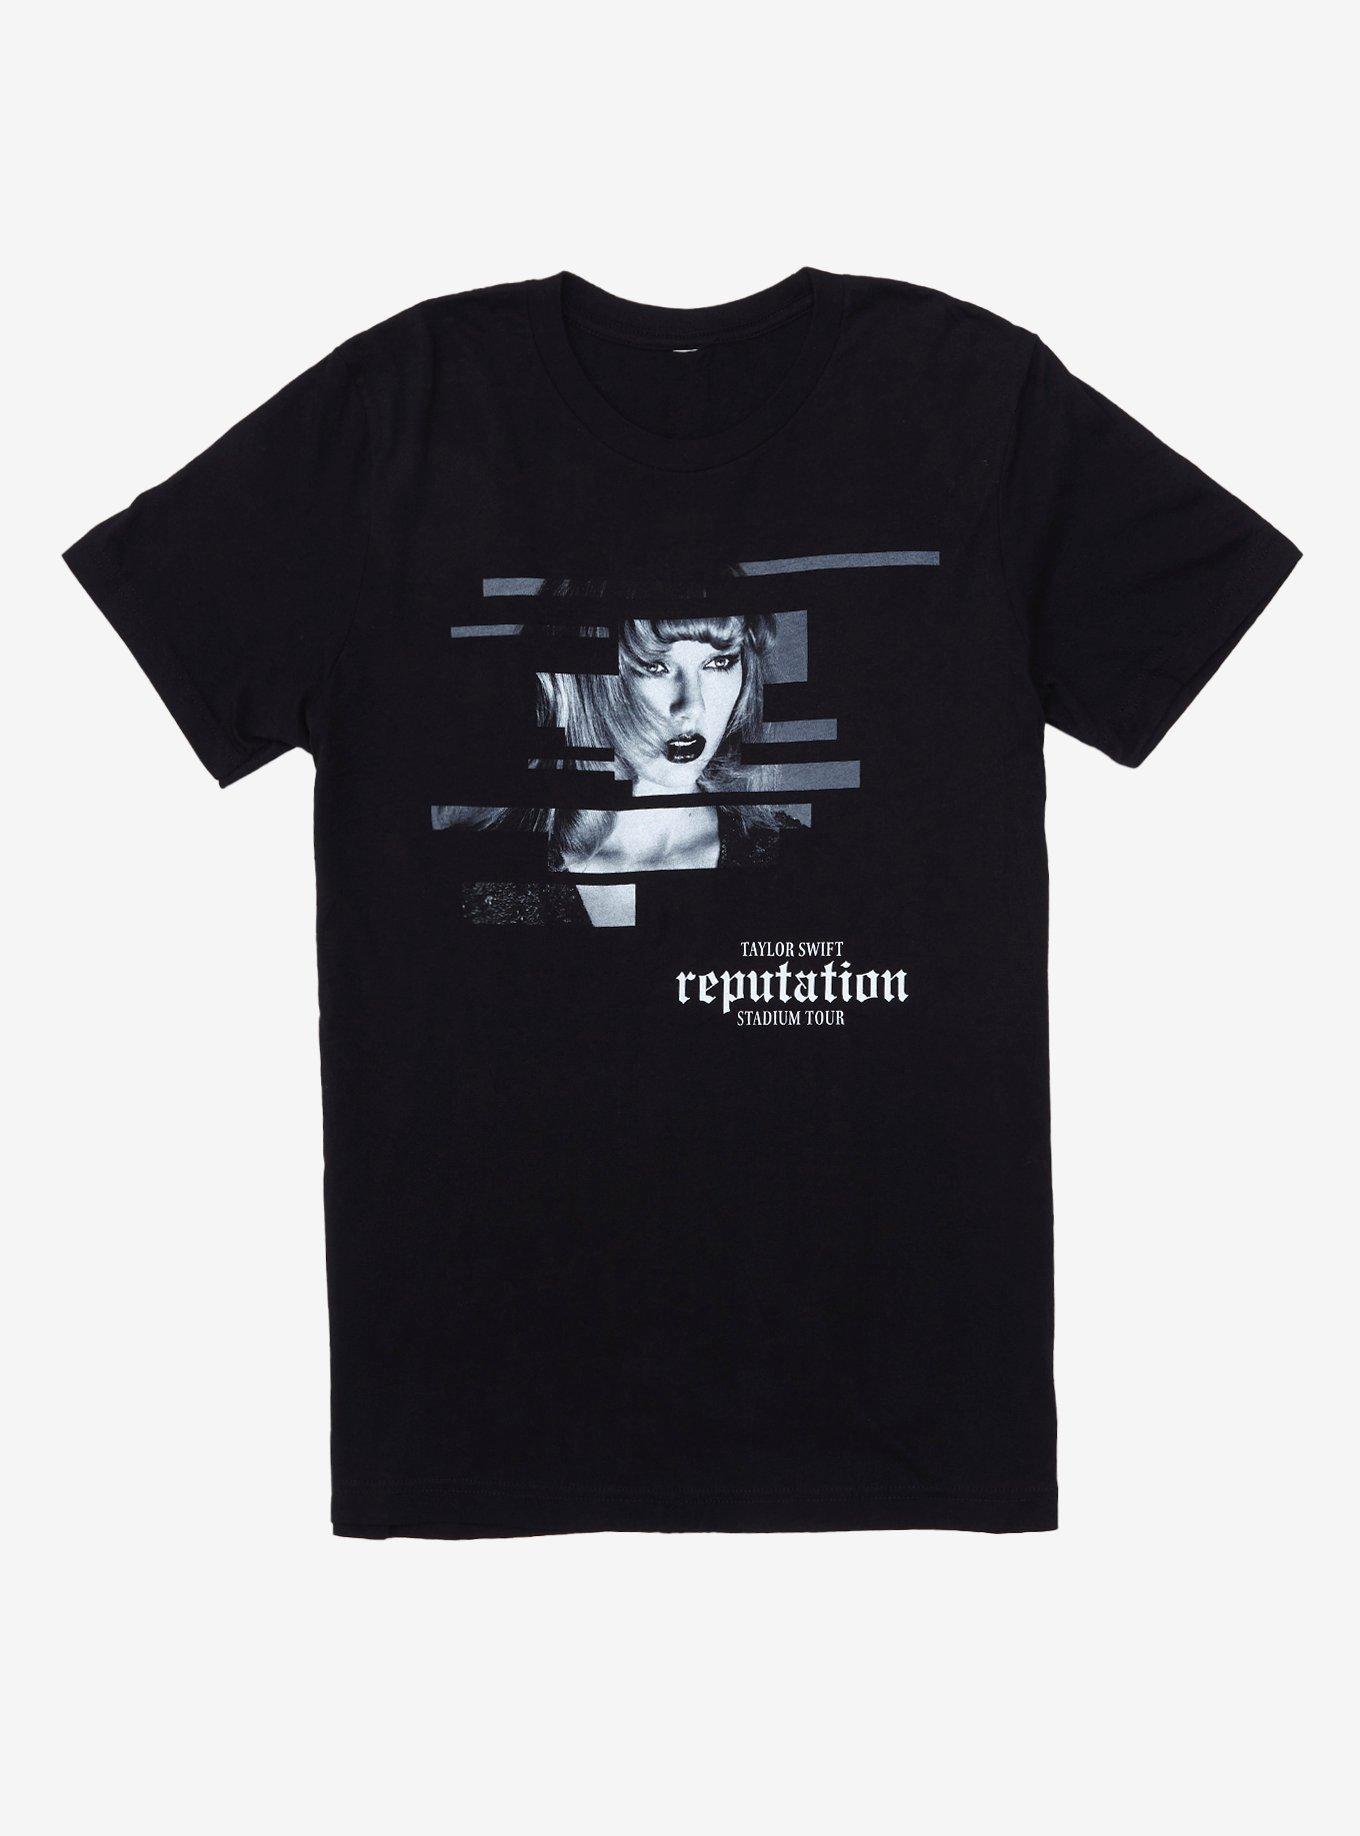 Taylor Swift Reputation Tour T-Shirt